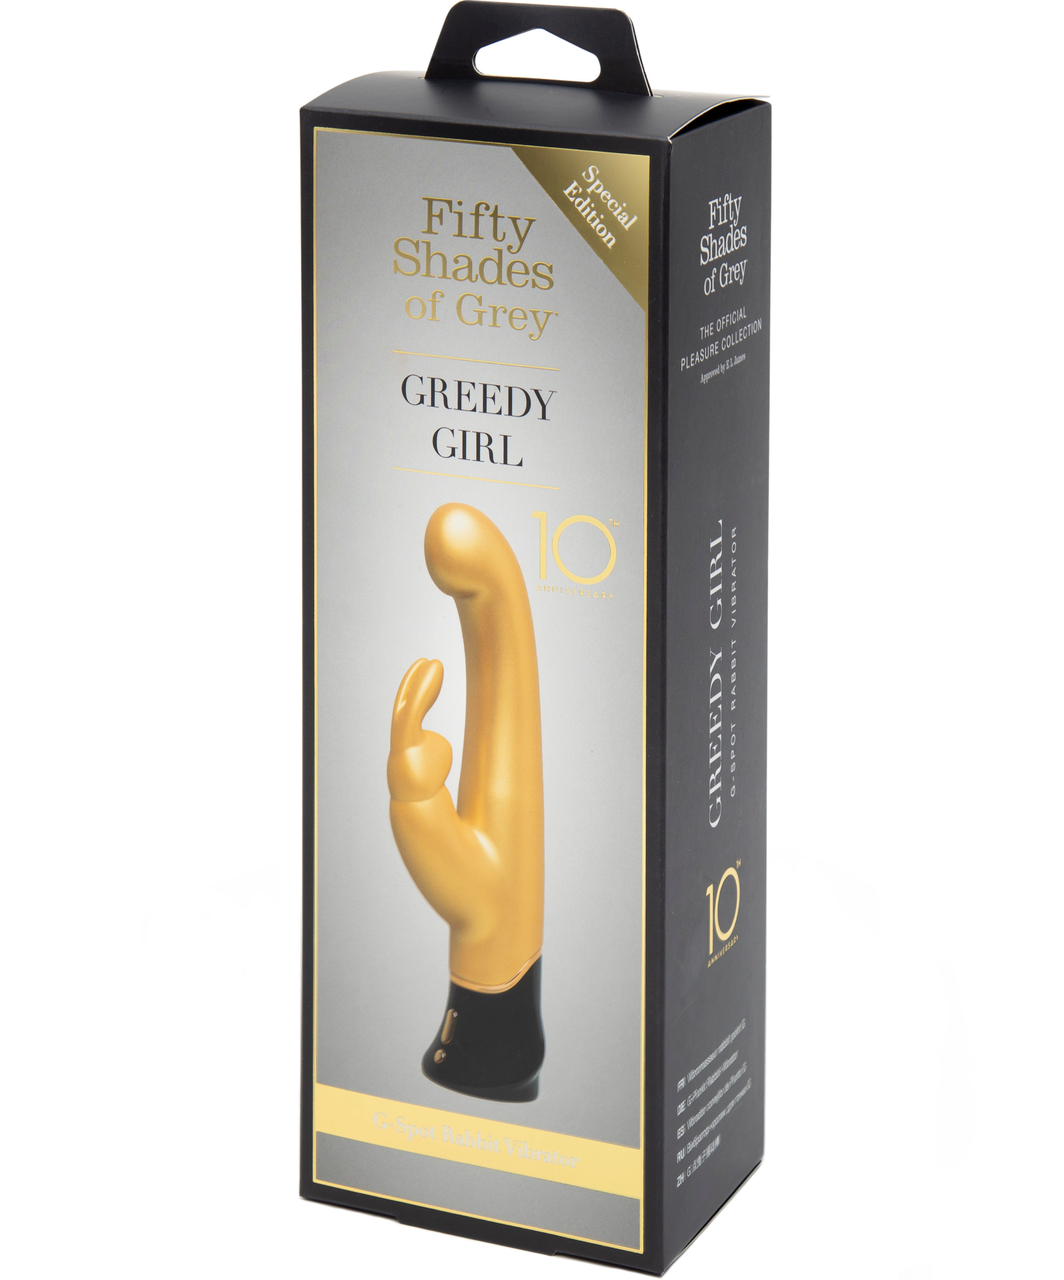 Fifty Shades of Grey Greedy Girl 10 Year Anniversary Gold G-Spot Rabbit Vibrator